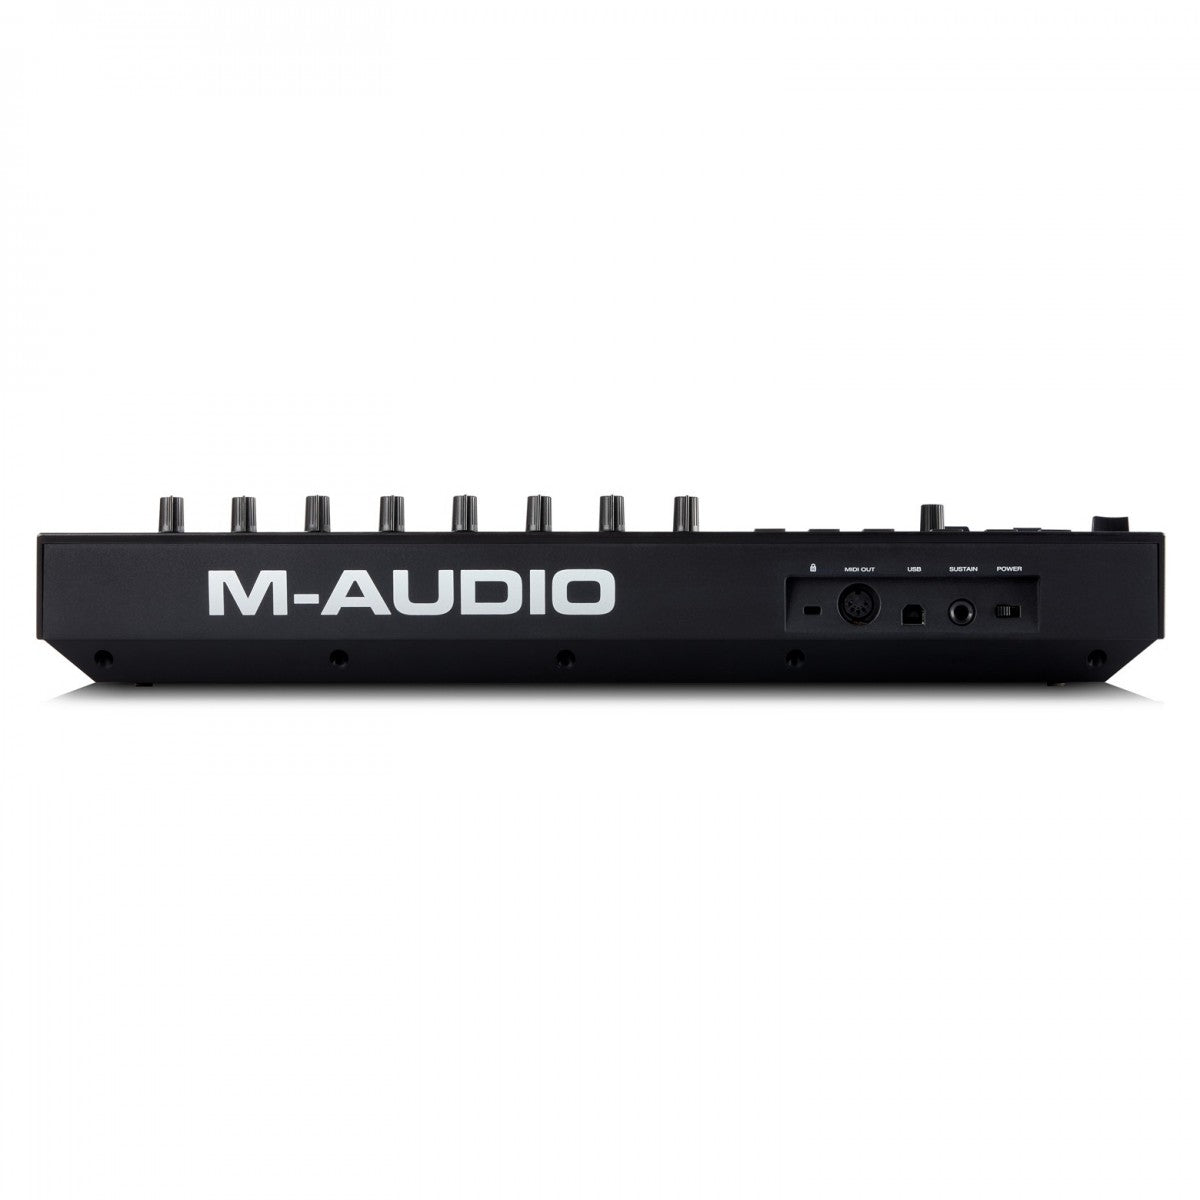 MIDI Keyboard Controller M-Audio Oxygen Pro 25 - Việt Music